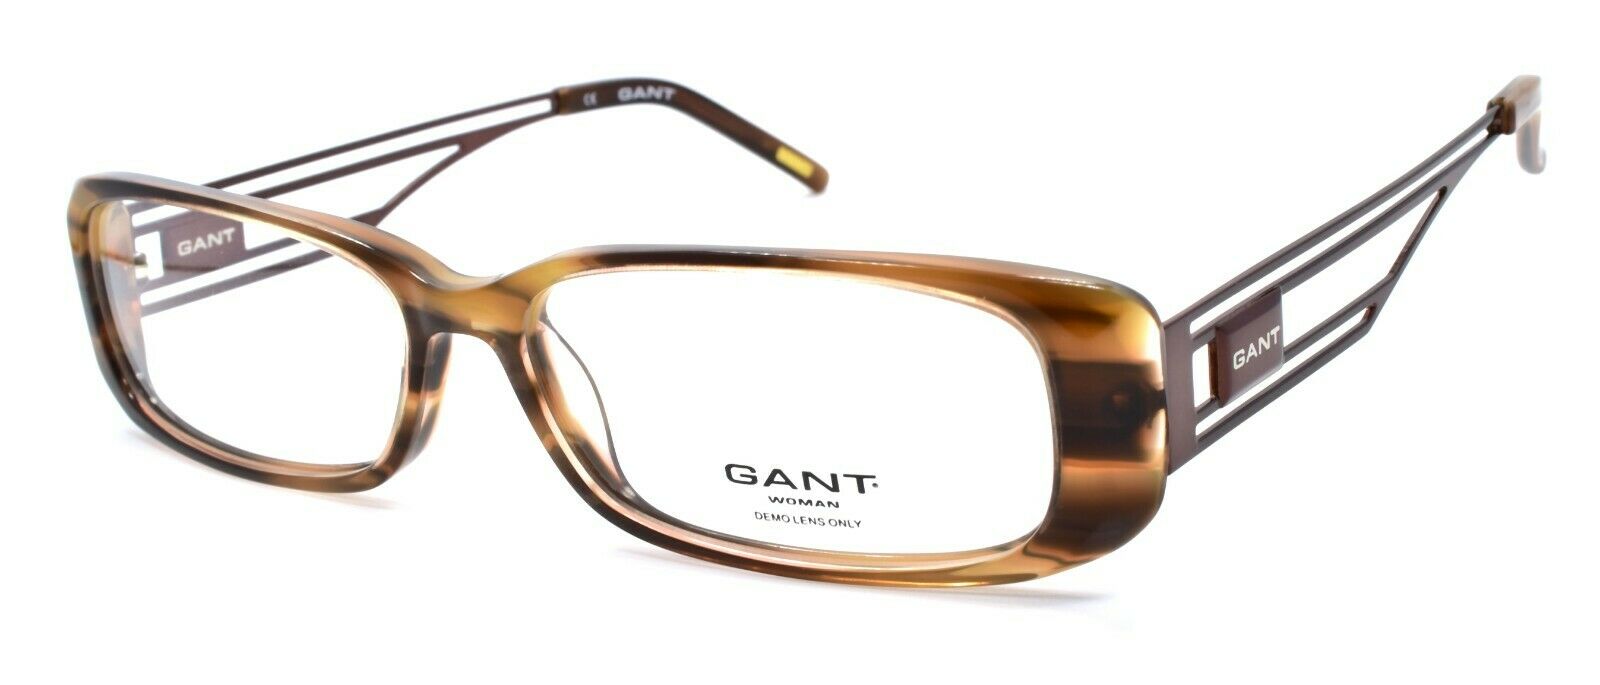 1-GANT GW Endora BRN Women's Eyeglasses Frames 53-14-135 Brown-715583165045-IKSpecs